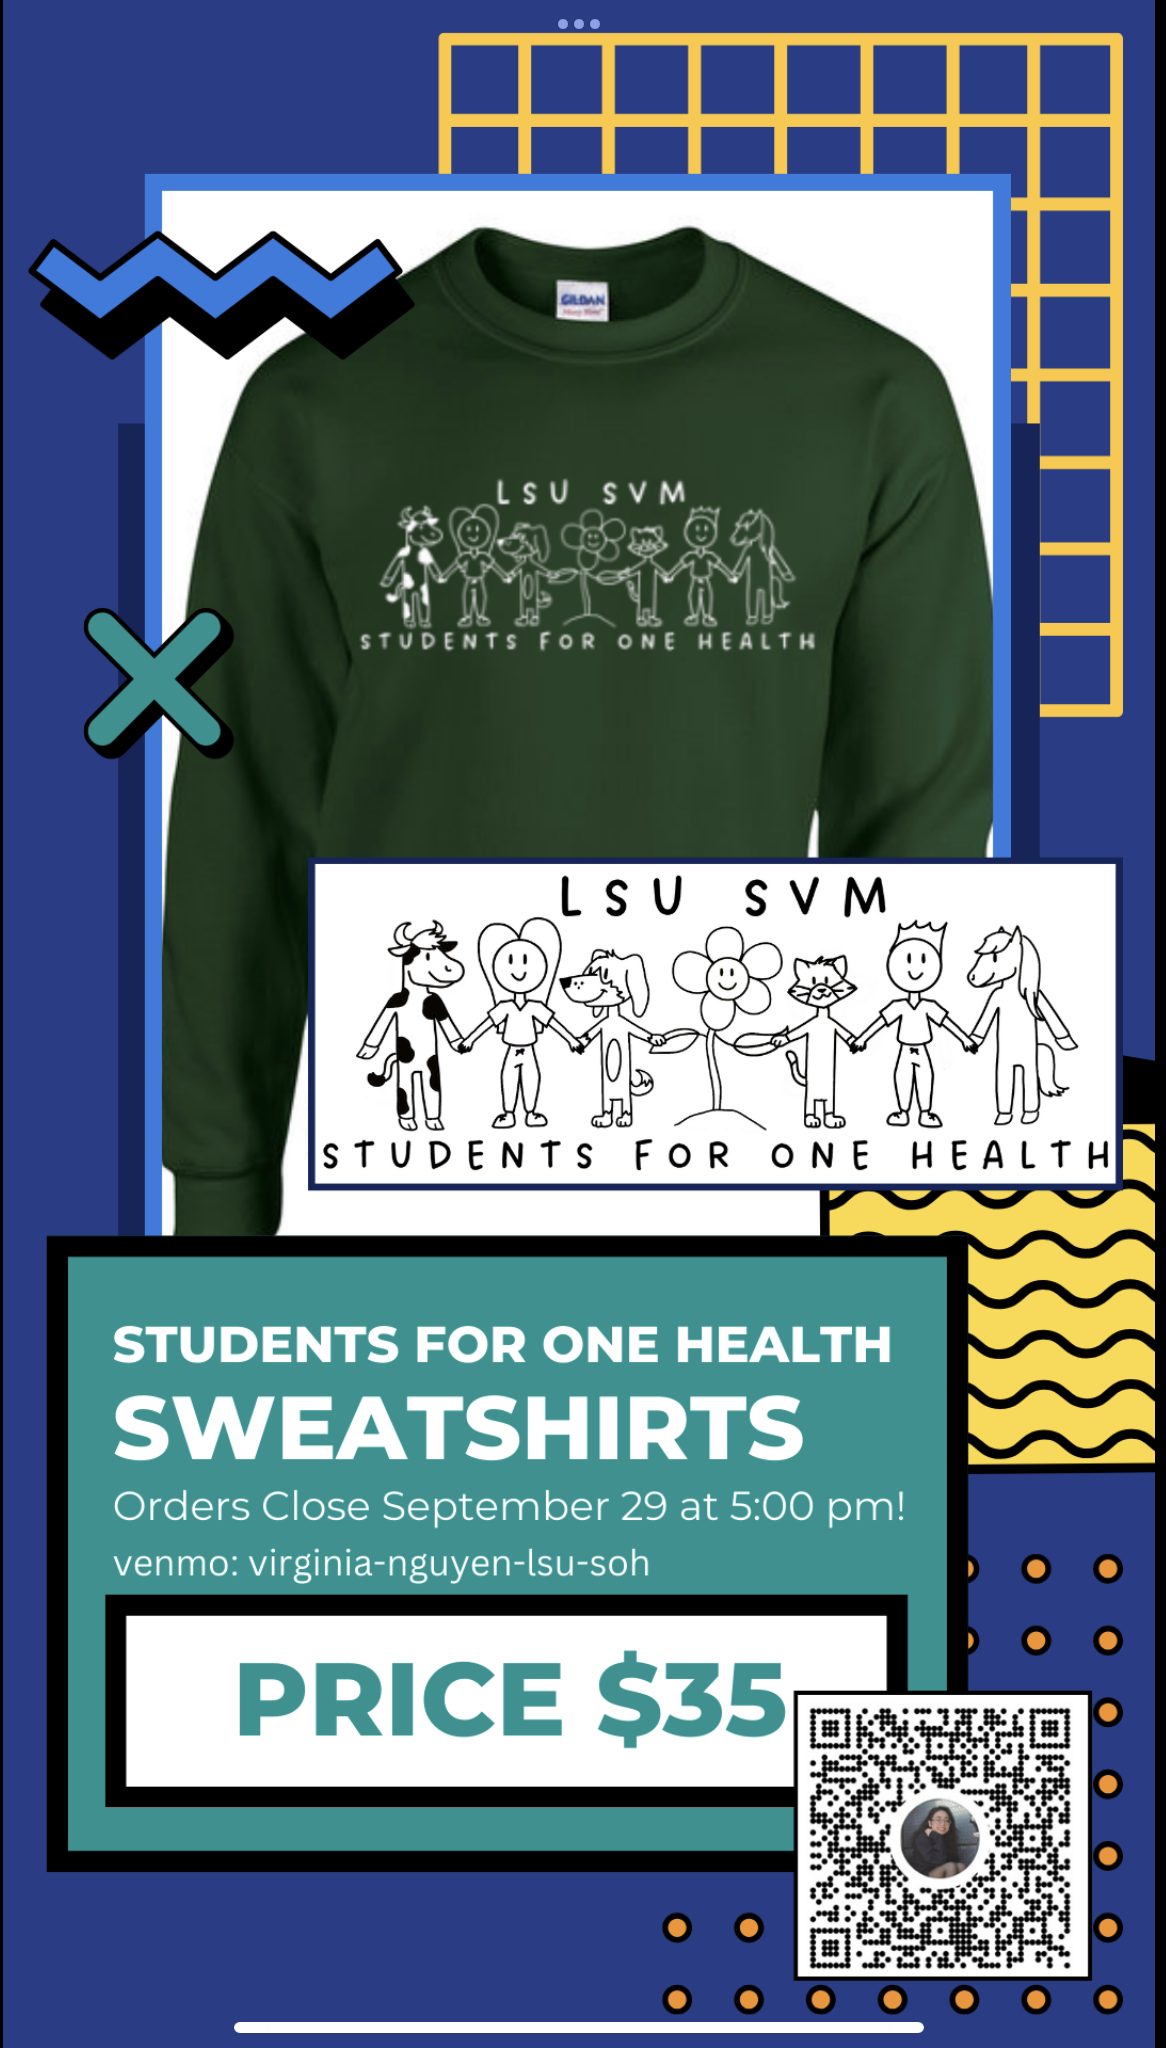 One Health sweatshirt